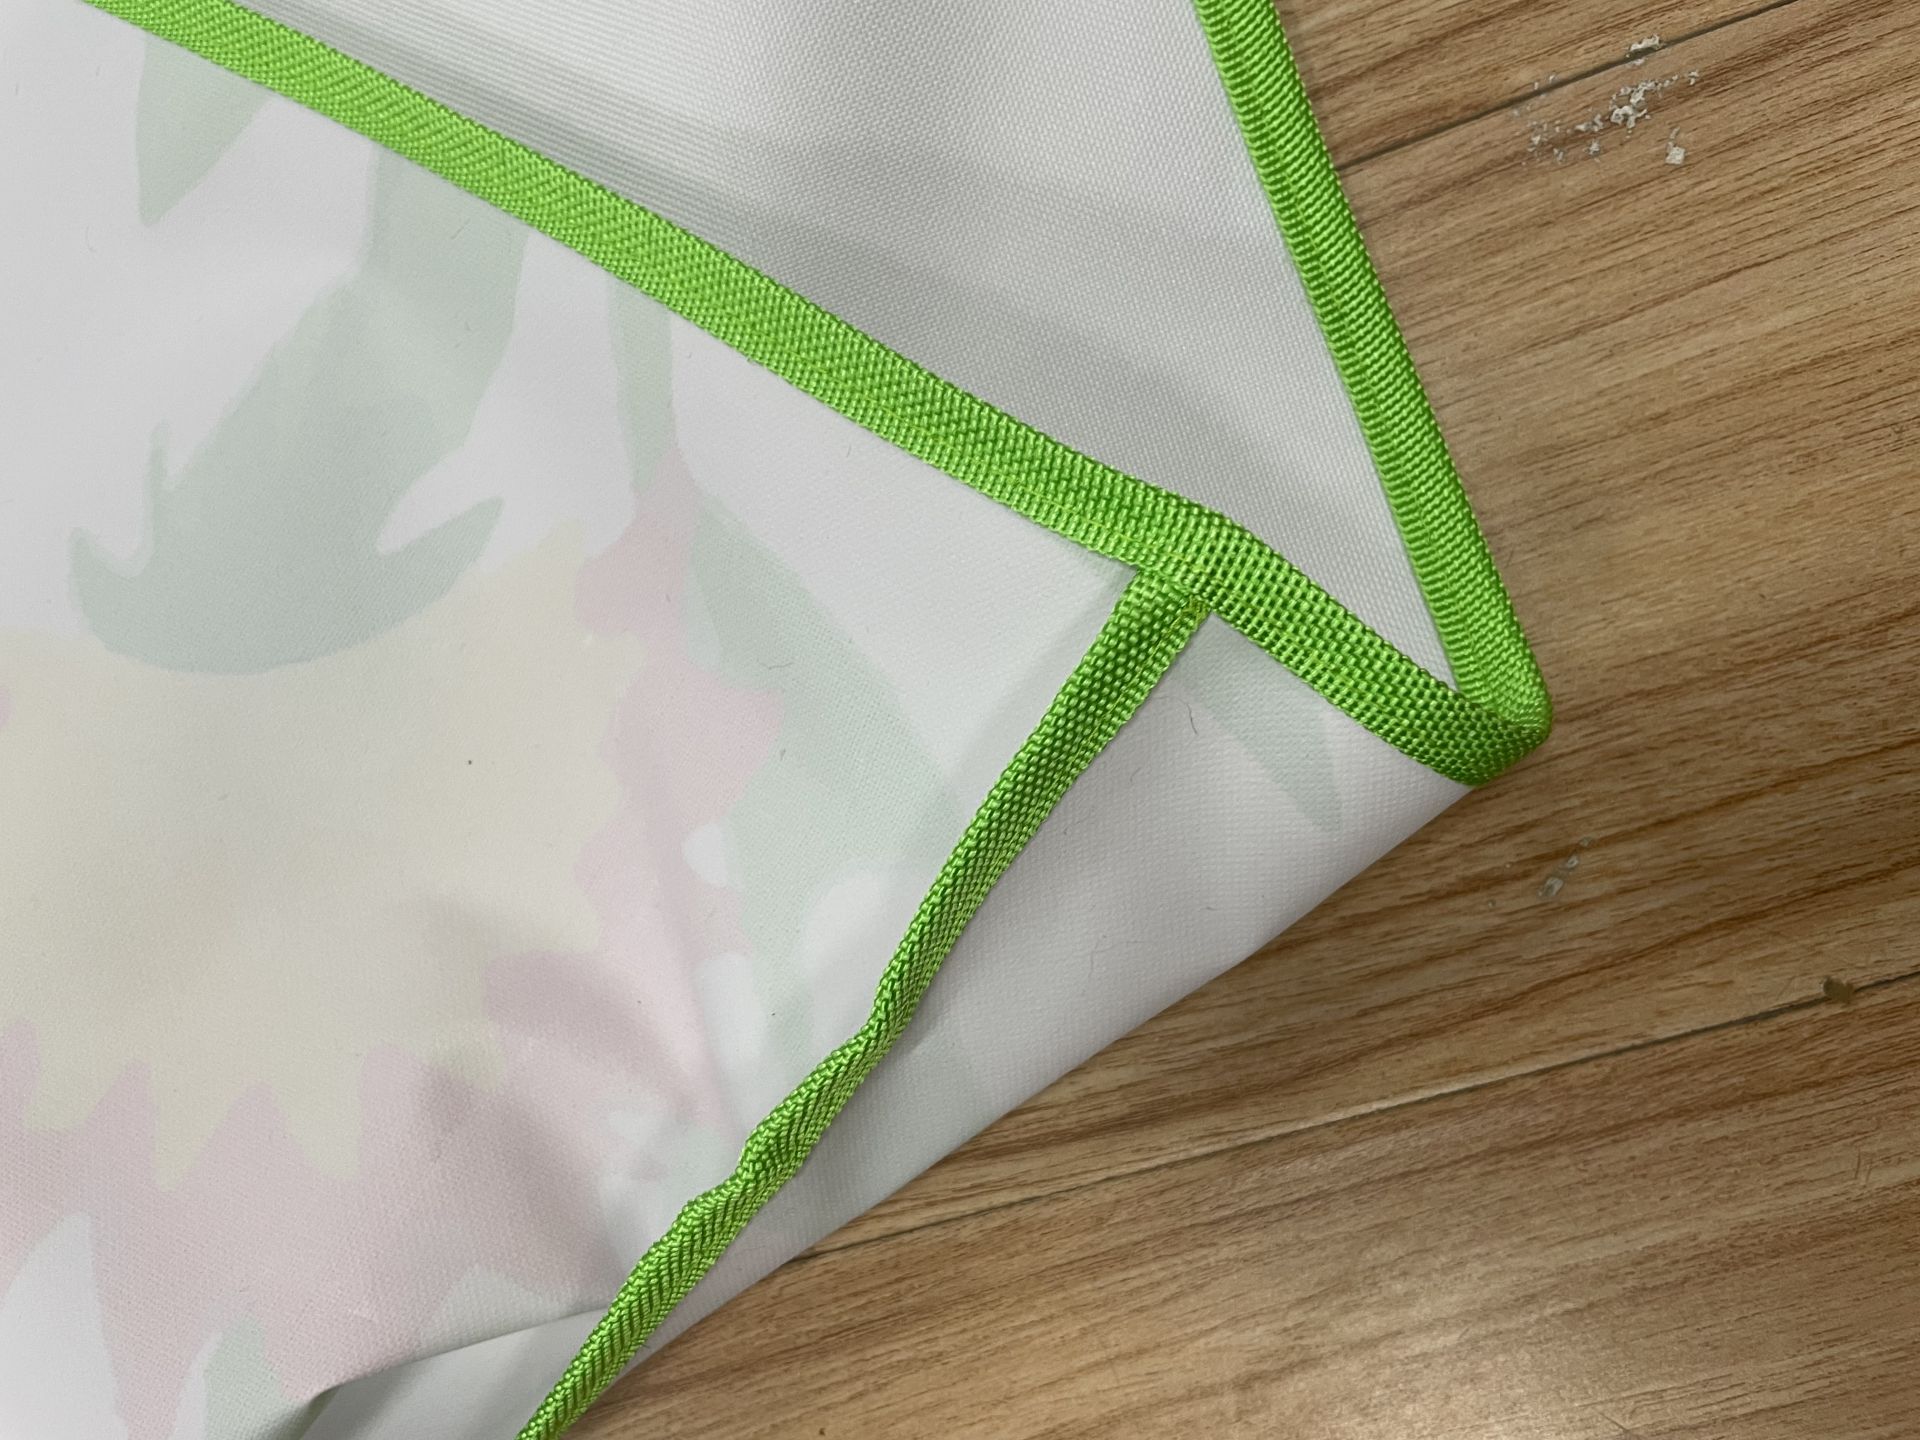 Custom Picnic Blankets - Waterproof PVC